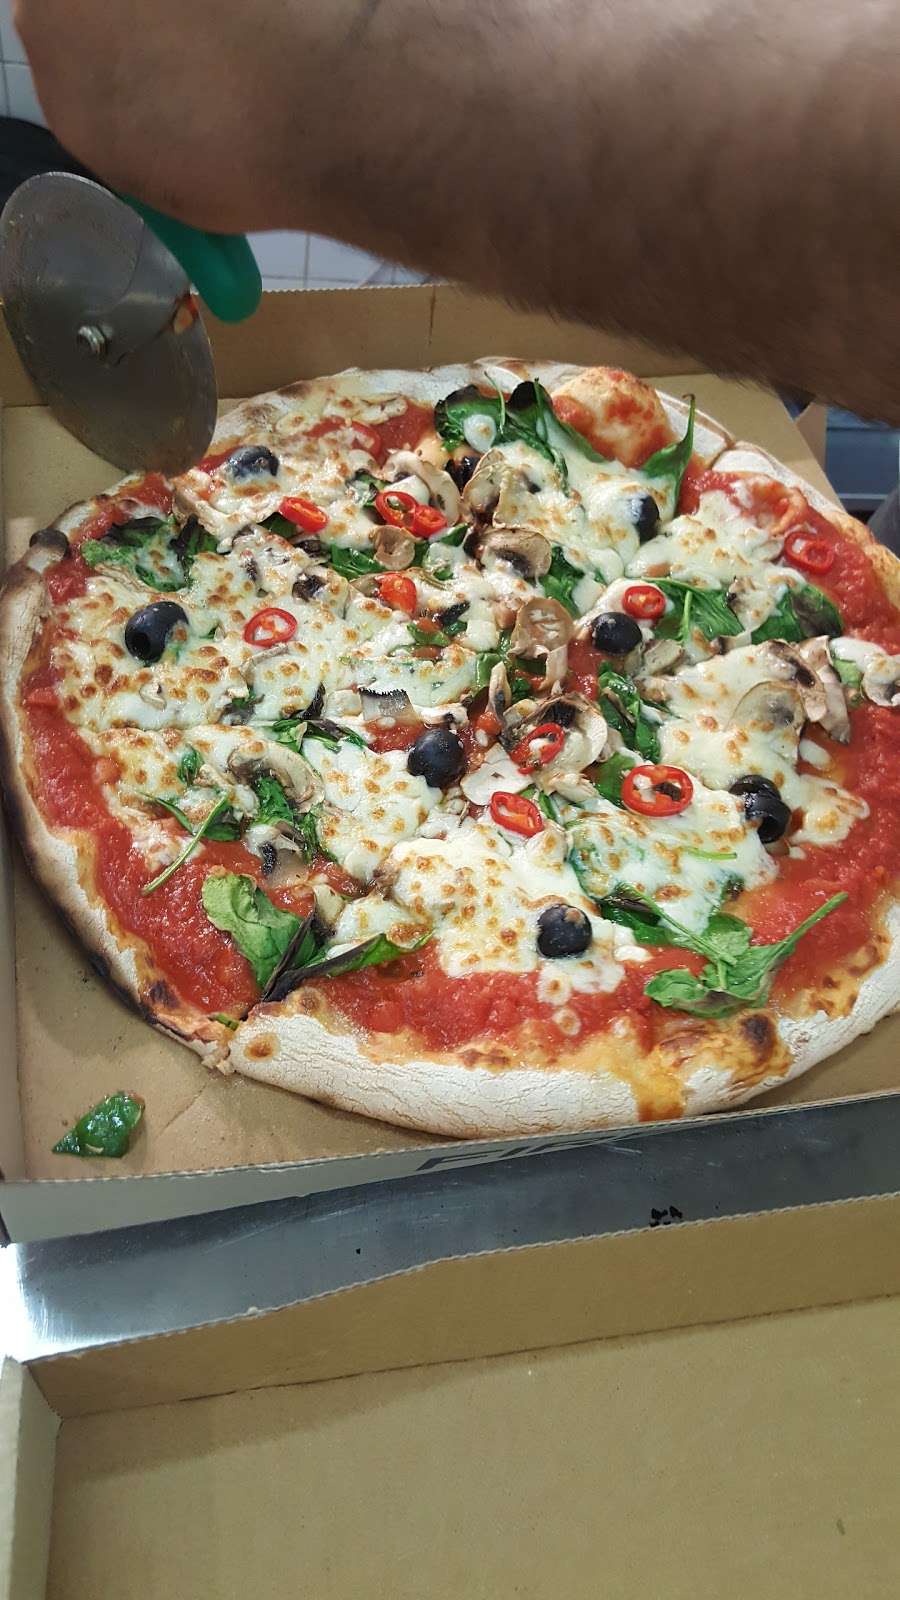 Firezza Pizza Wimbledon | 266 The Broadway, London SW19 1SB, UK | Phone: 020 8542 4400